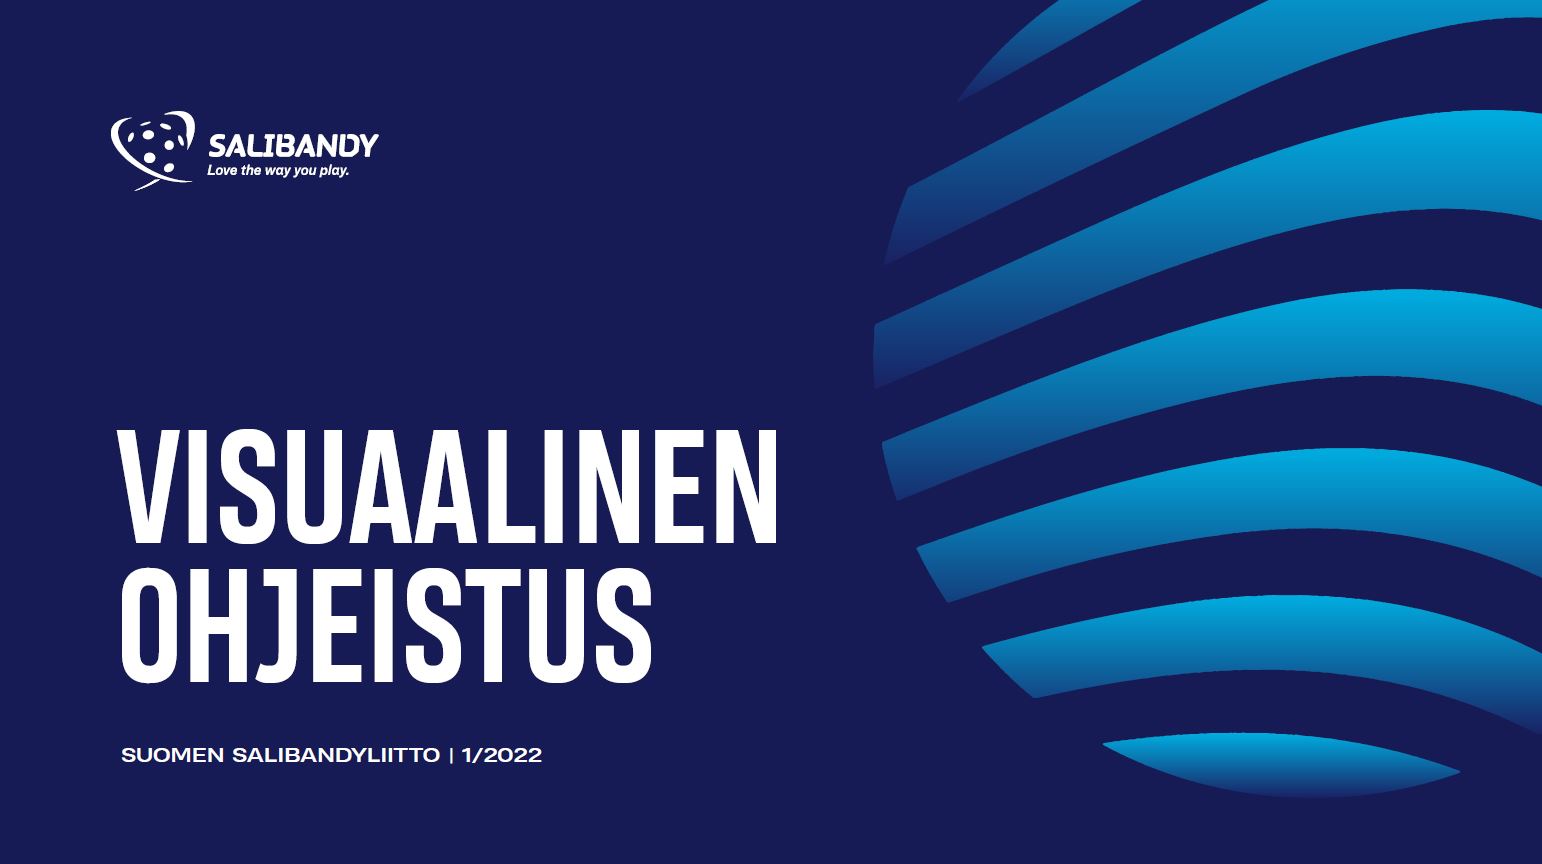 Salibandyn brändi ja logot - Suomen Salibandyliitto